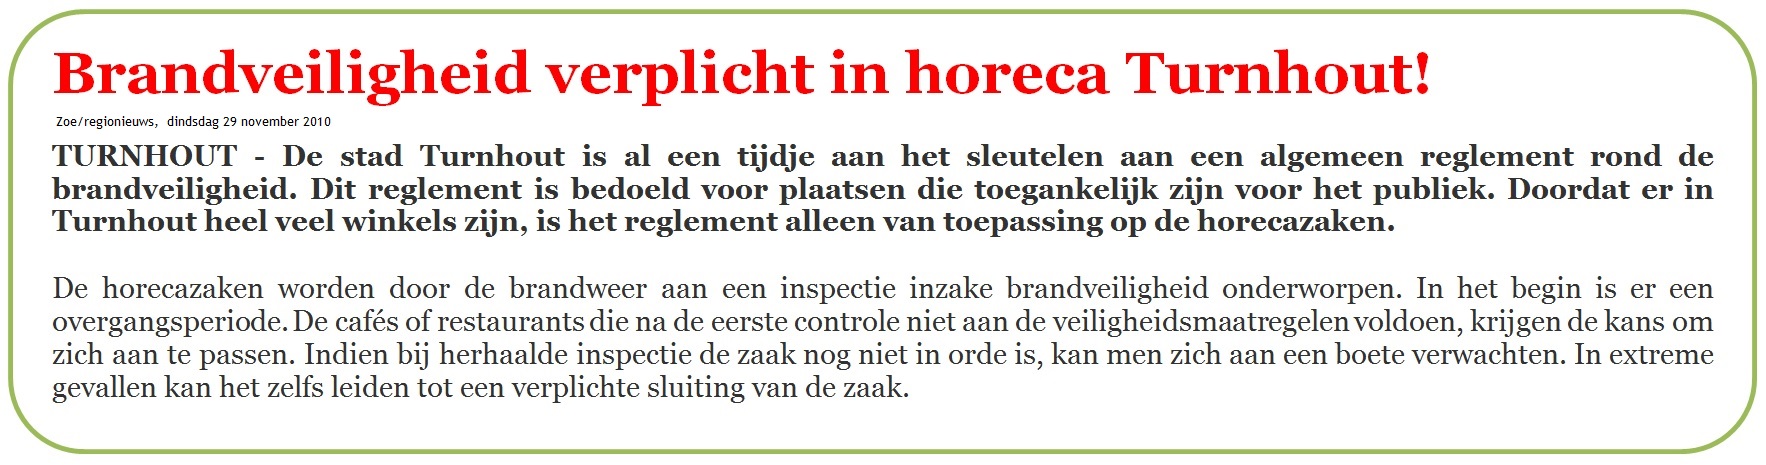 Brandveiligheid verplicht in horeca Turnhout